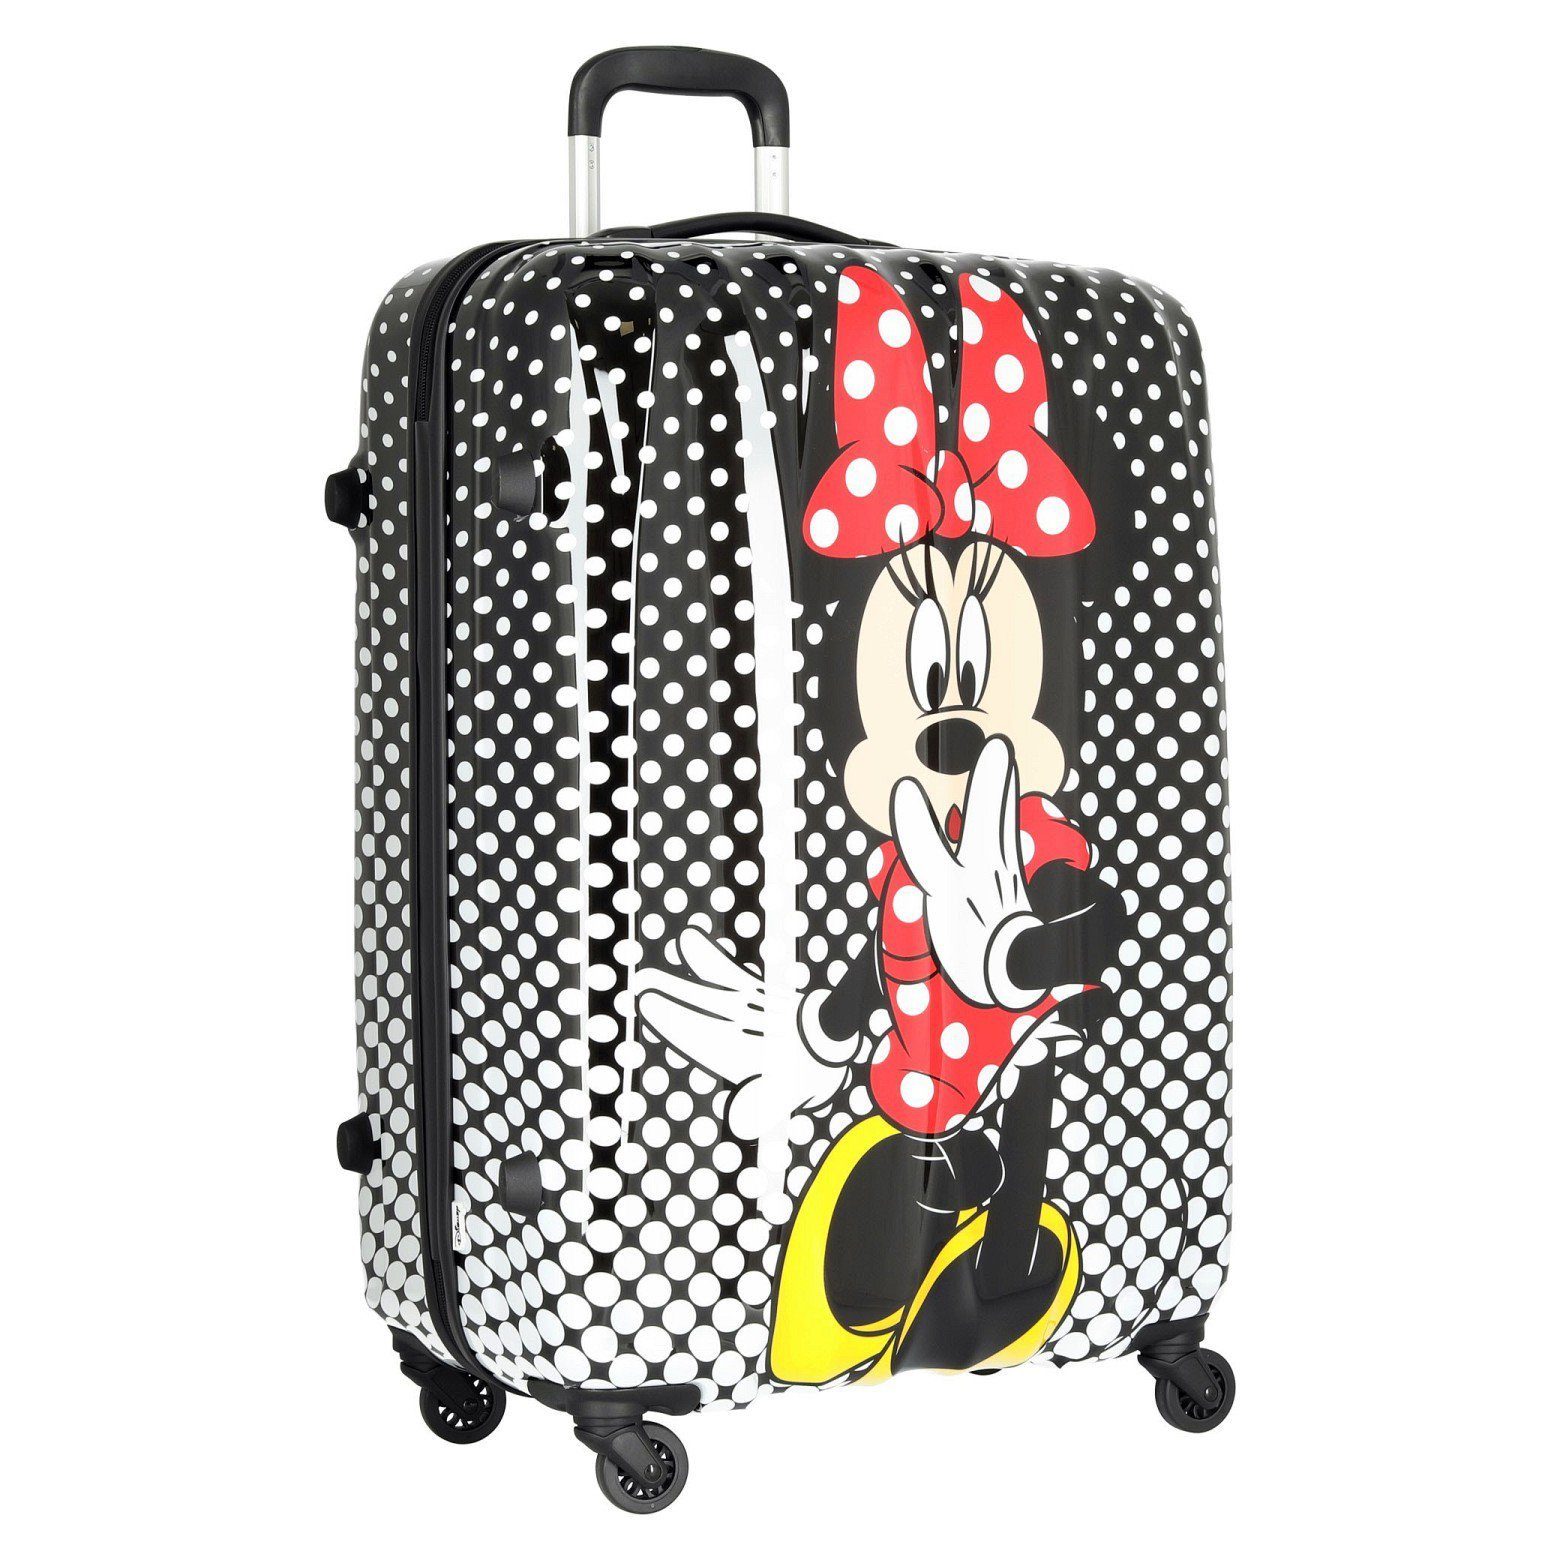 Mouse 4 Polka L - Disney 2.0 4-Rollen-Trolley Rollen Minnie Trolley Alfatwist American Dot 75/28, Tourister®